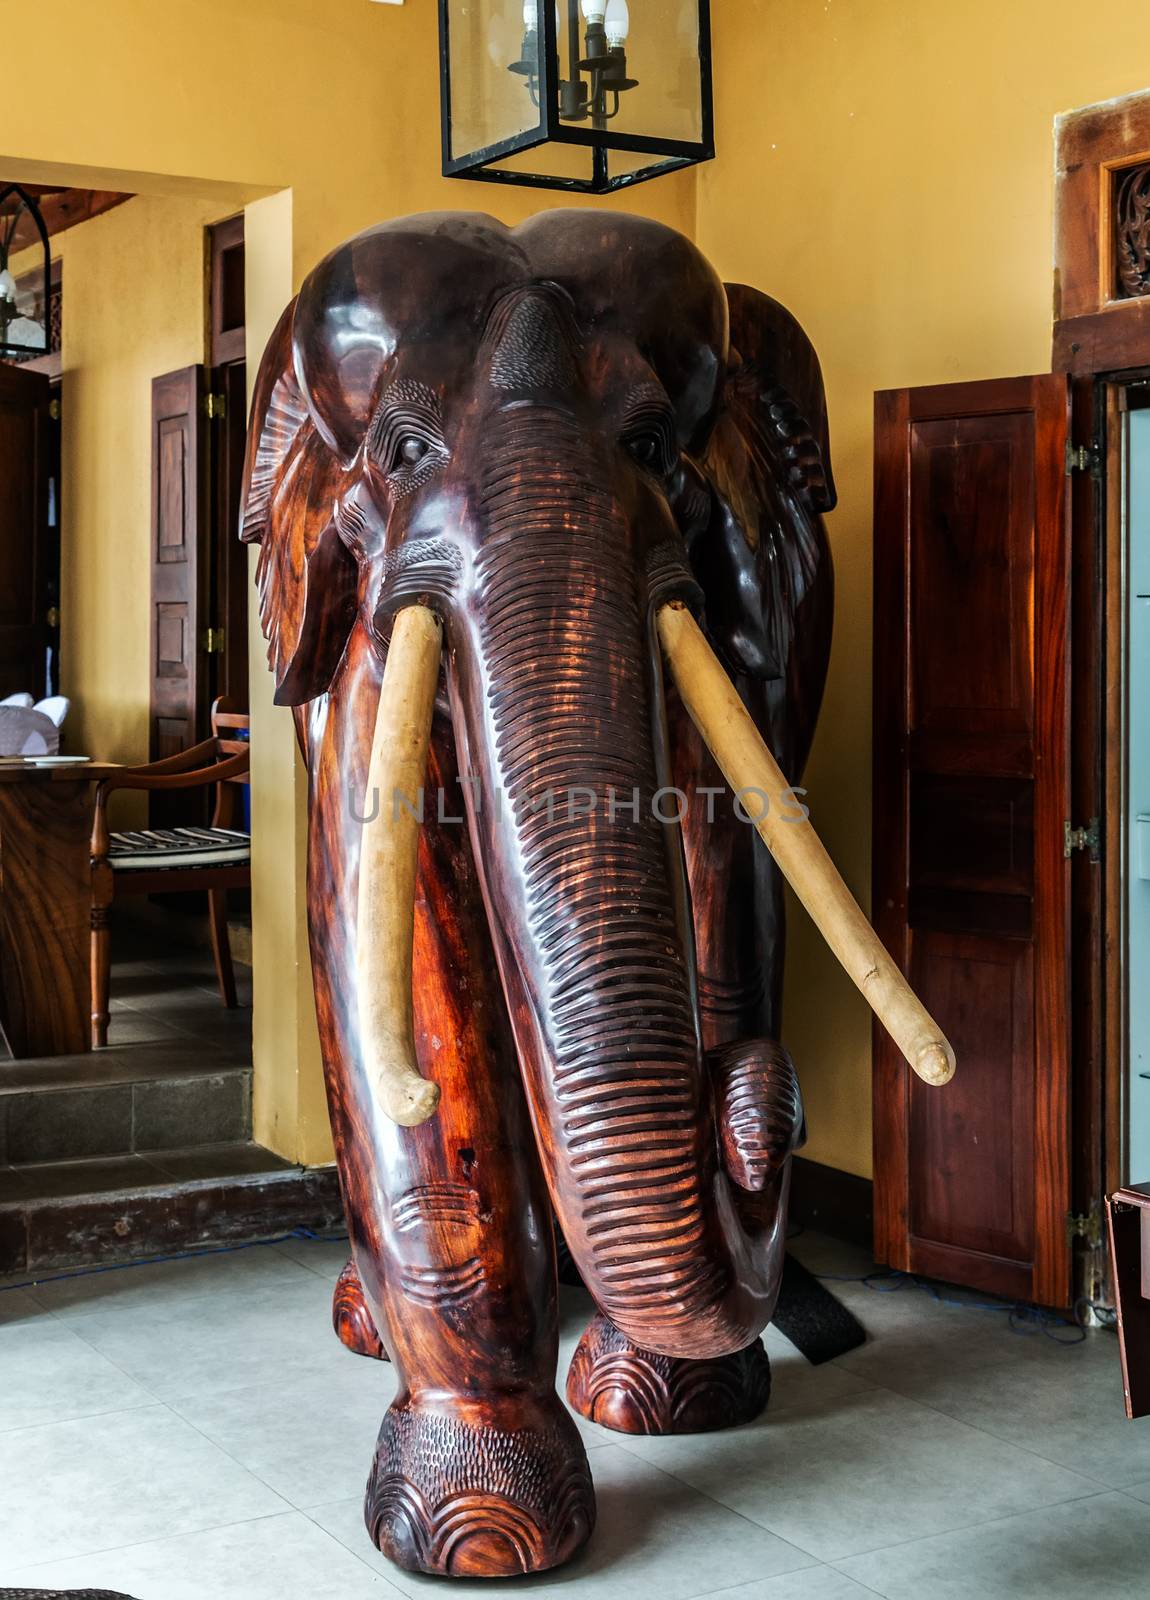 Elephants wild animals, Sri Lanka